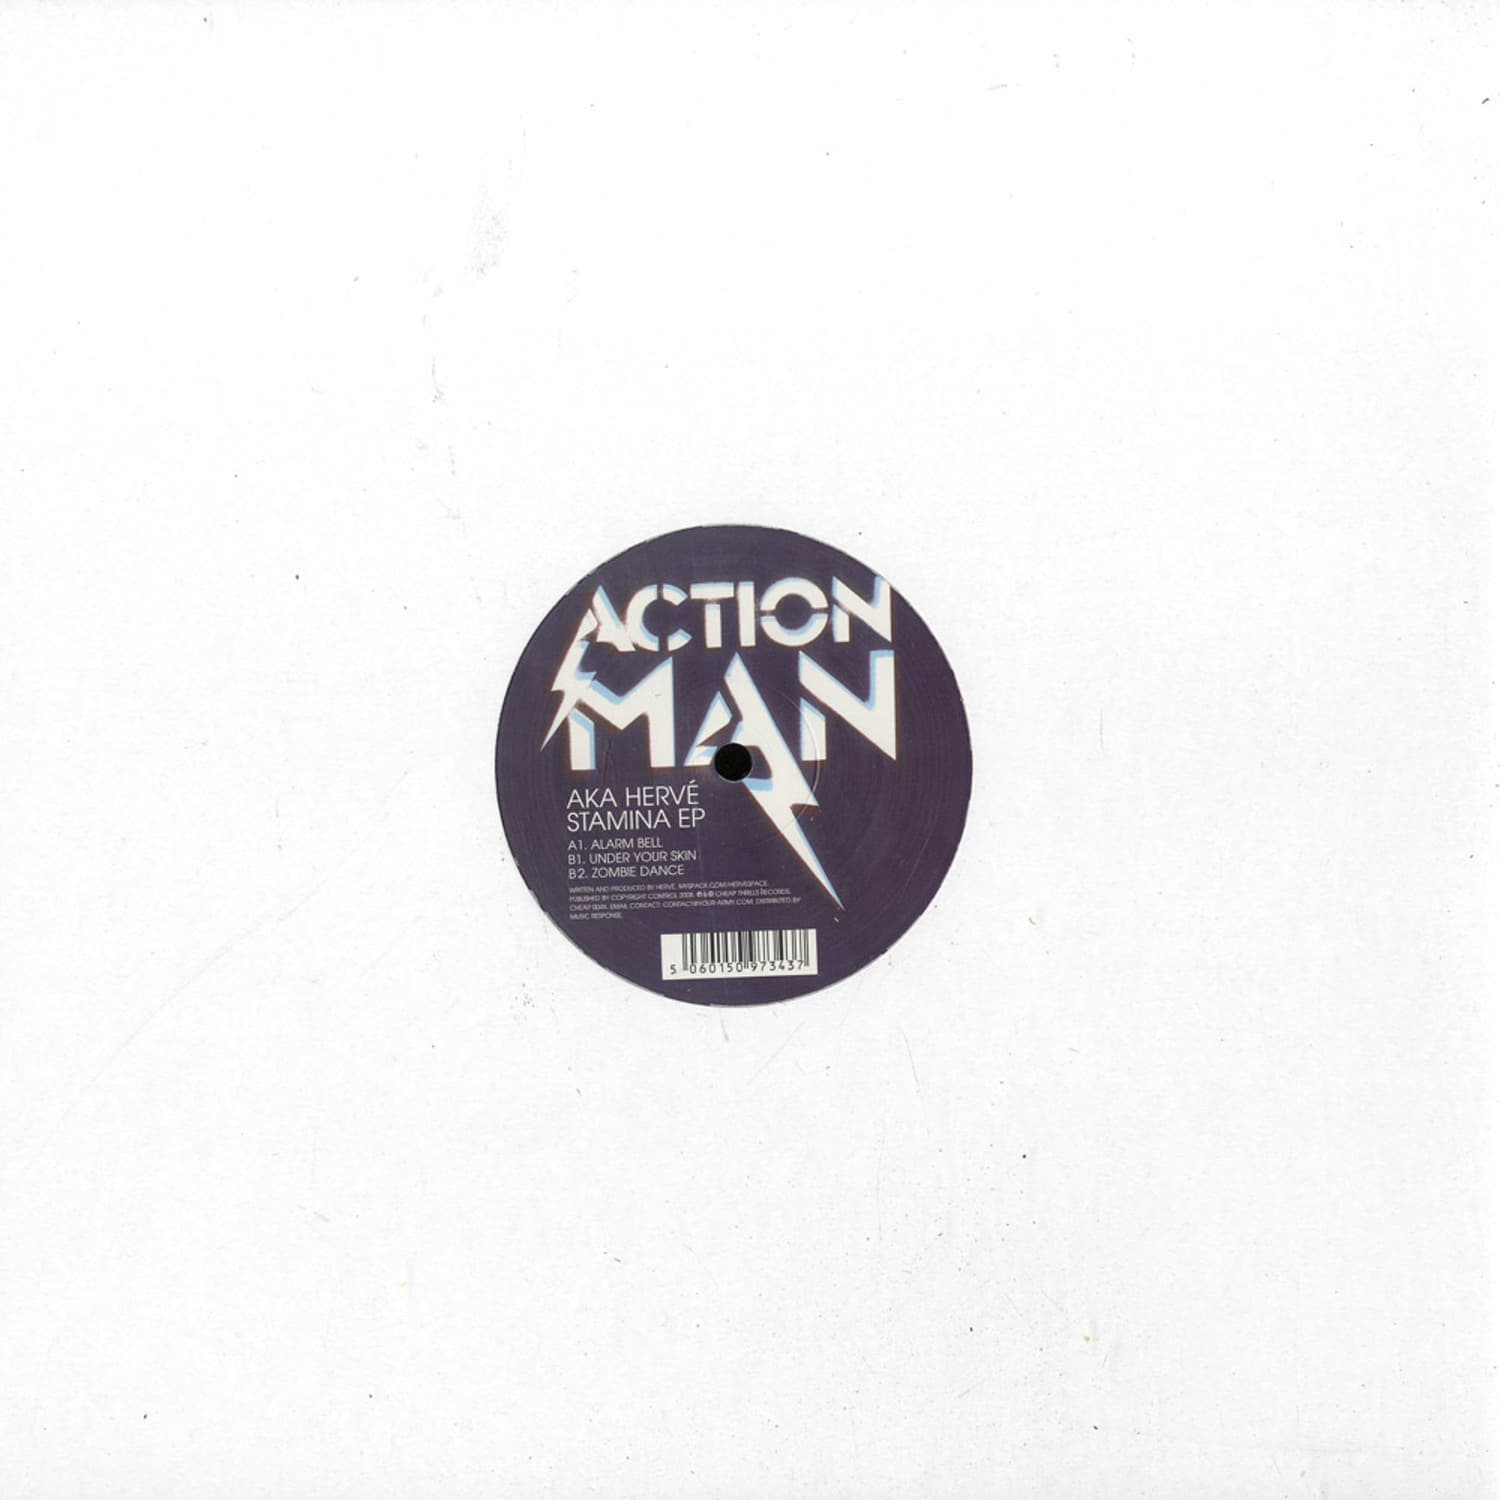 Action Man aka Herve - STAMINA EP